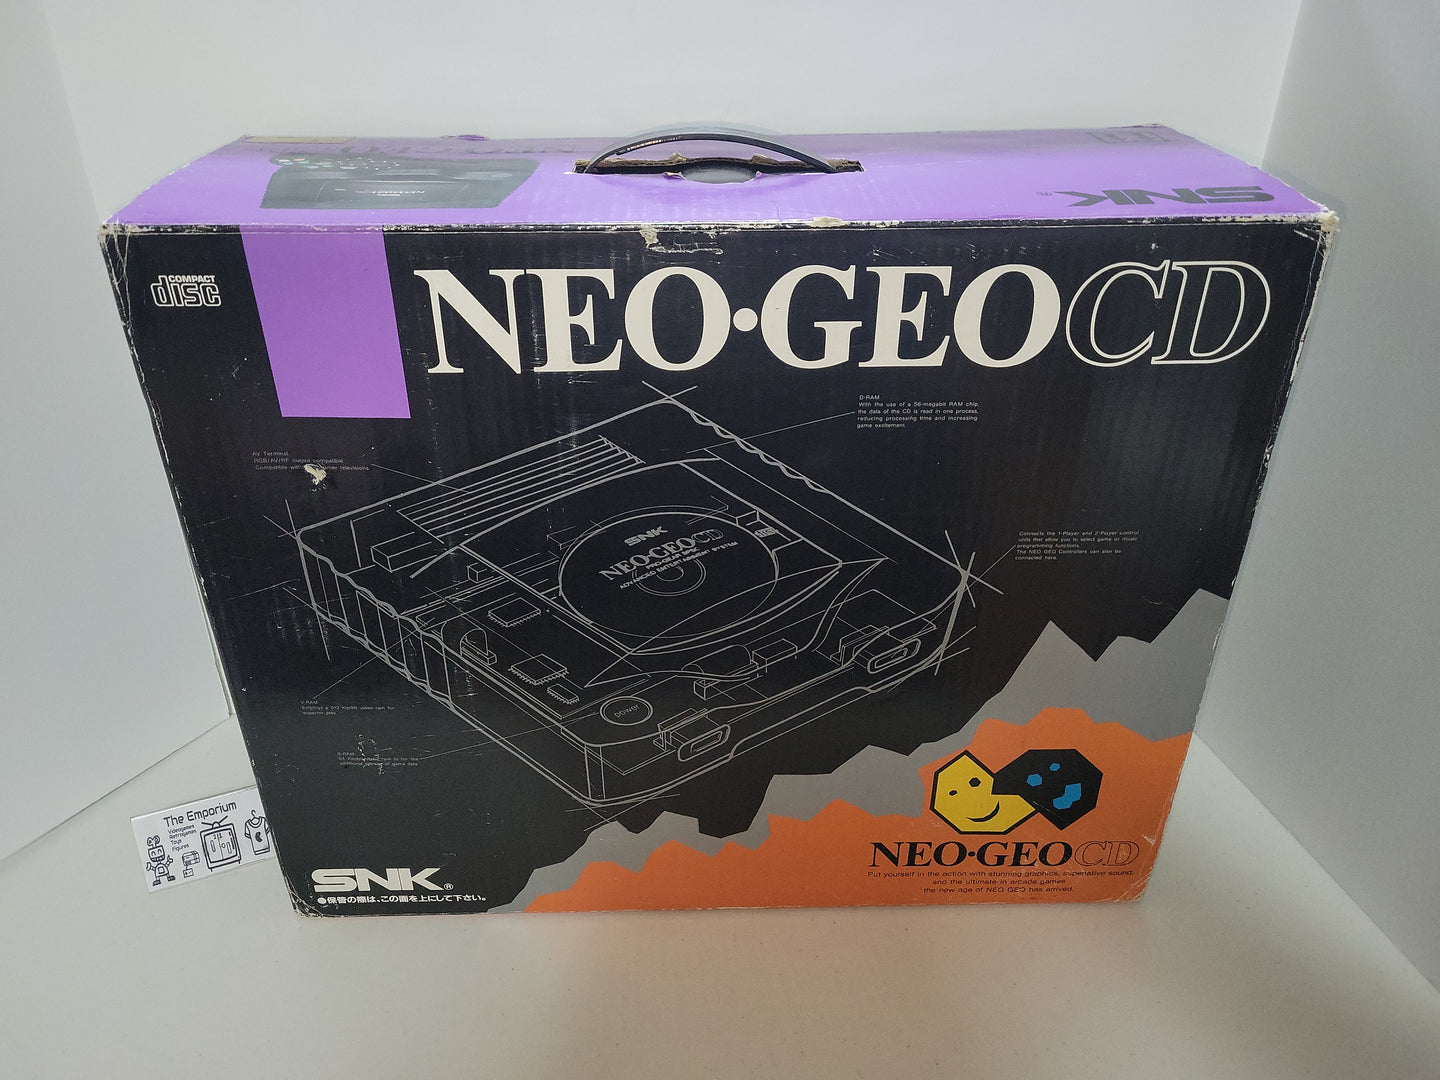 Snk NeoGeo Cd Console - Snk Neogeo cd ngcd